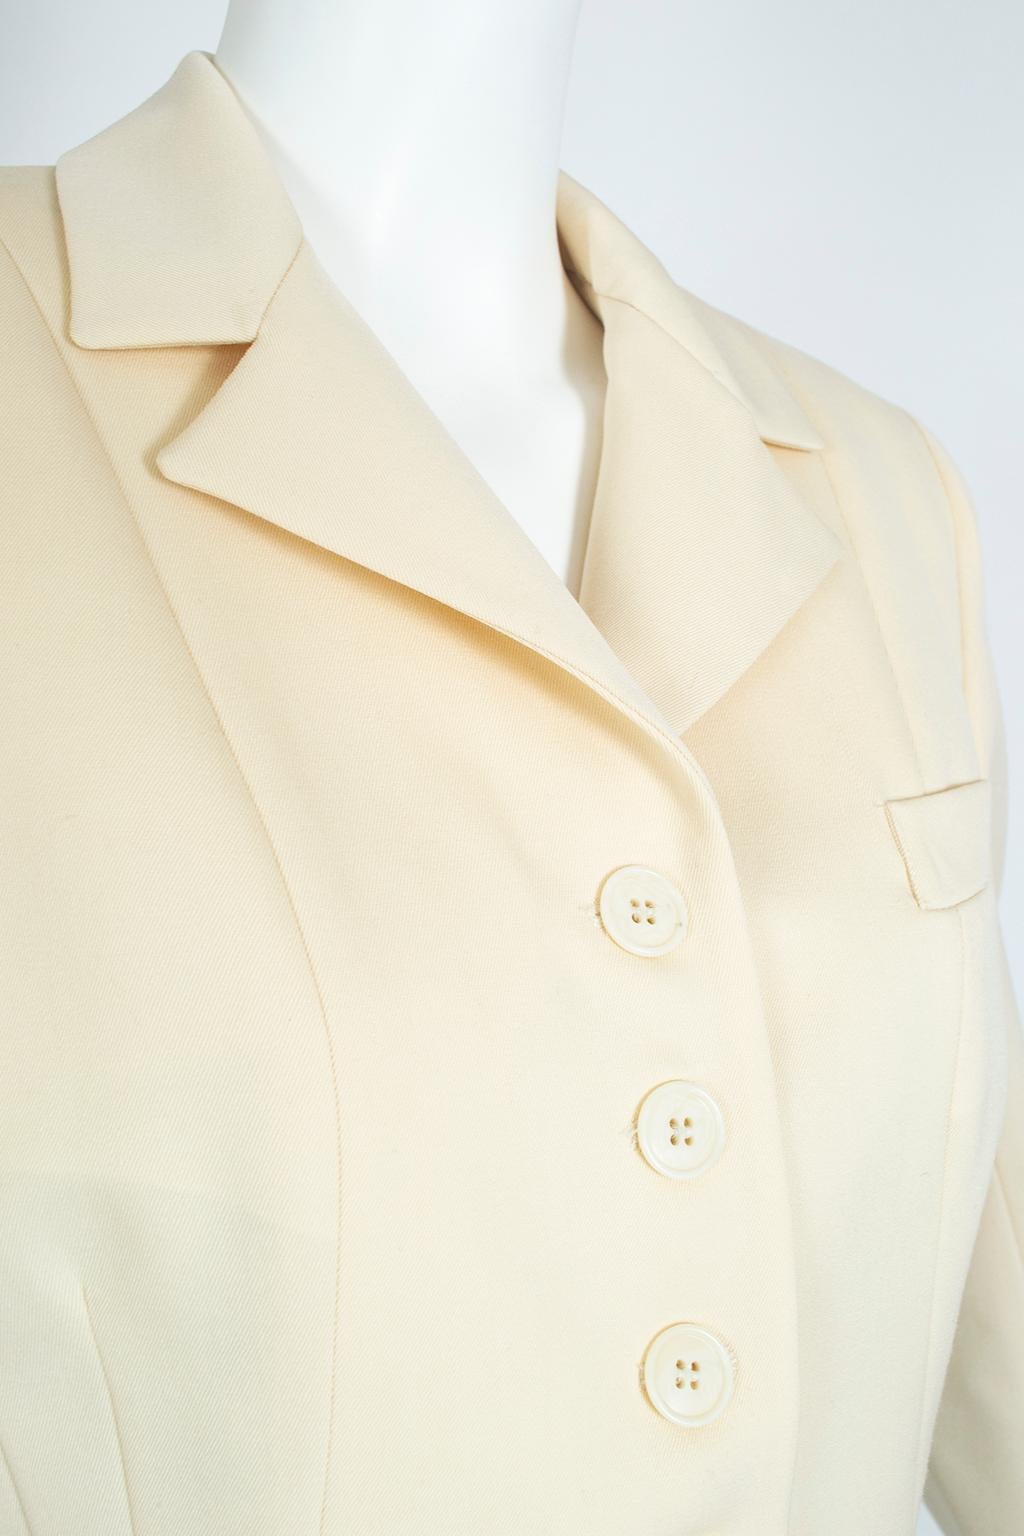 White Norma Kamali Ivory Wool Dioresque Sculpted Bar Jacket Peplum Blazer - XS, 1980s